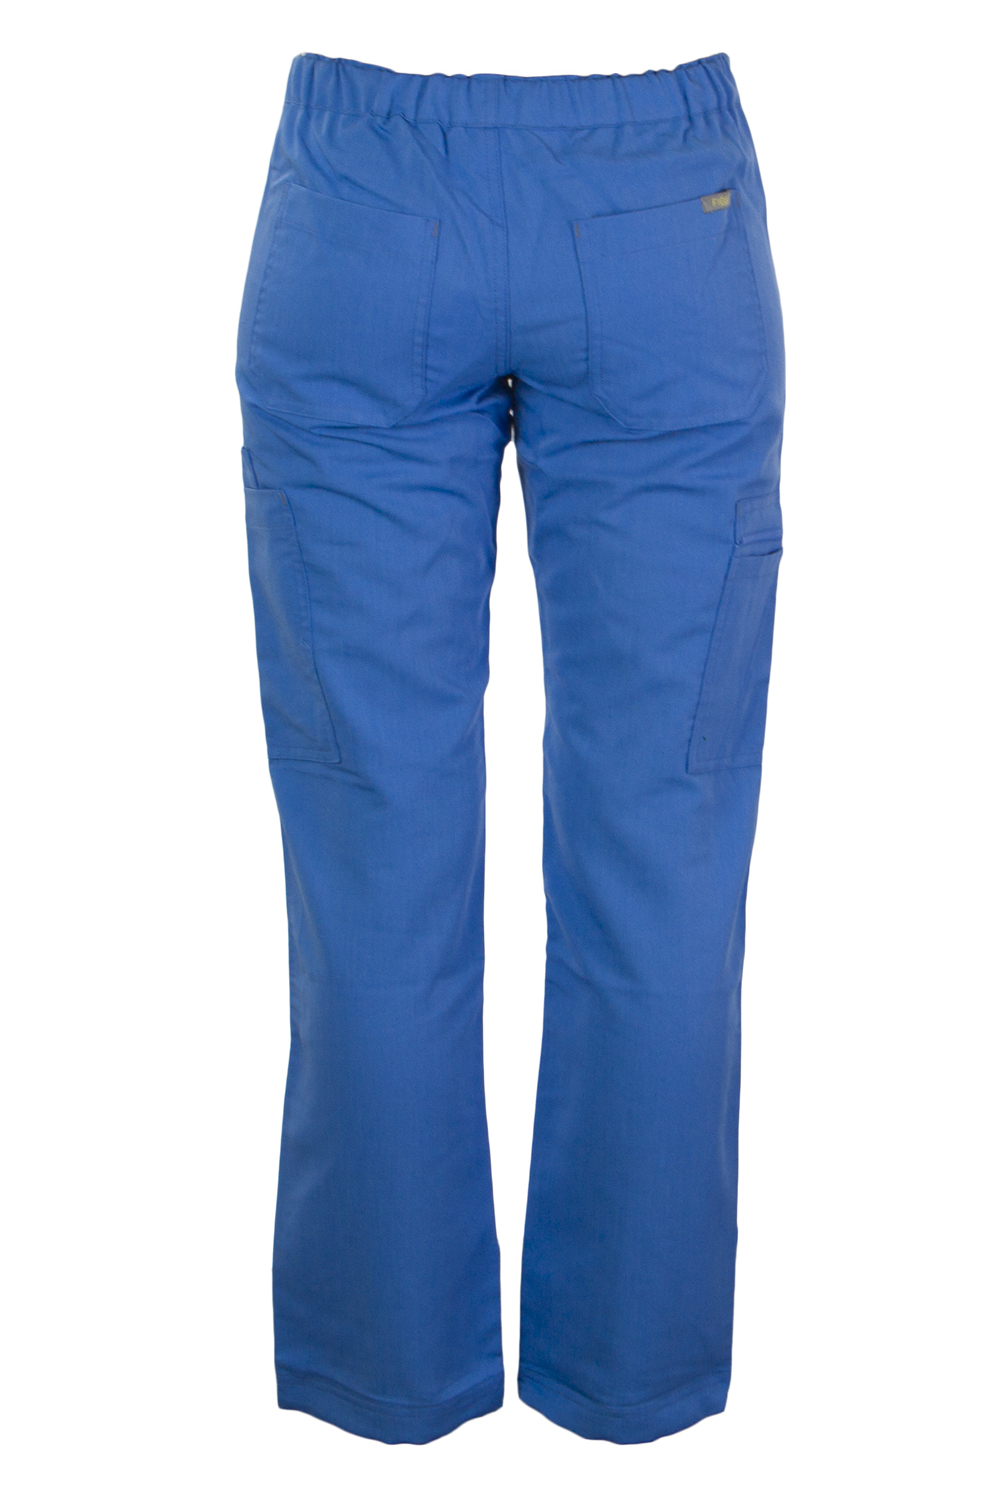 FIGS Womens Torbeck Petite Scrub Pants PW5500P $46 NWT | eBay